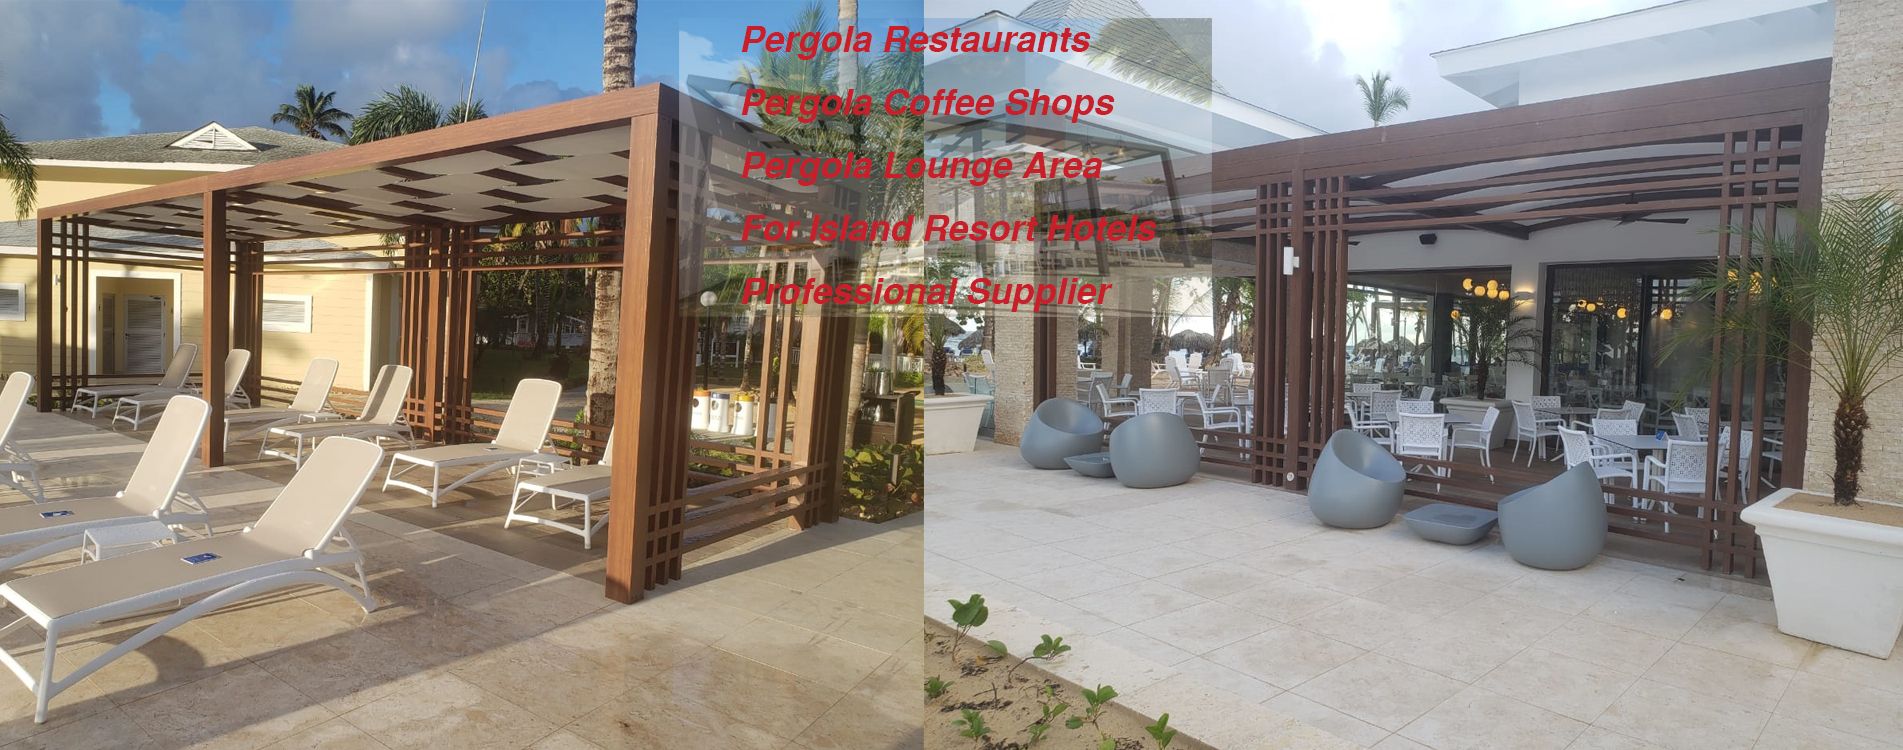 Pergola Restaurant Projects Supplier